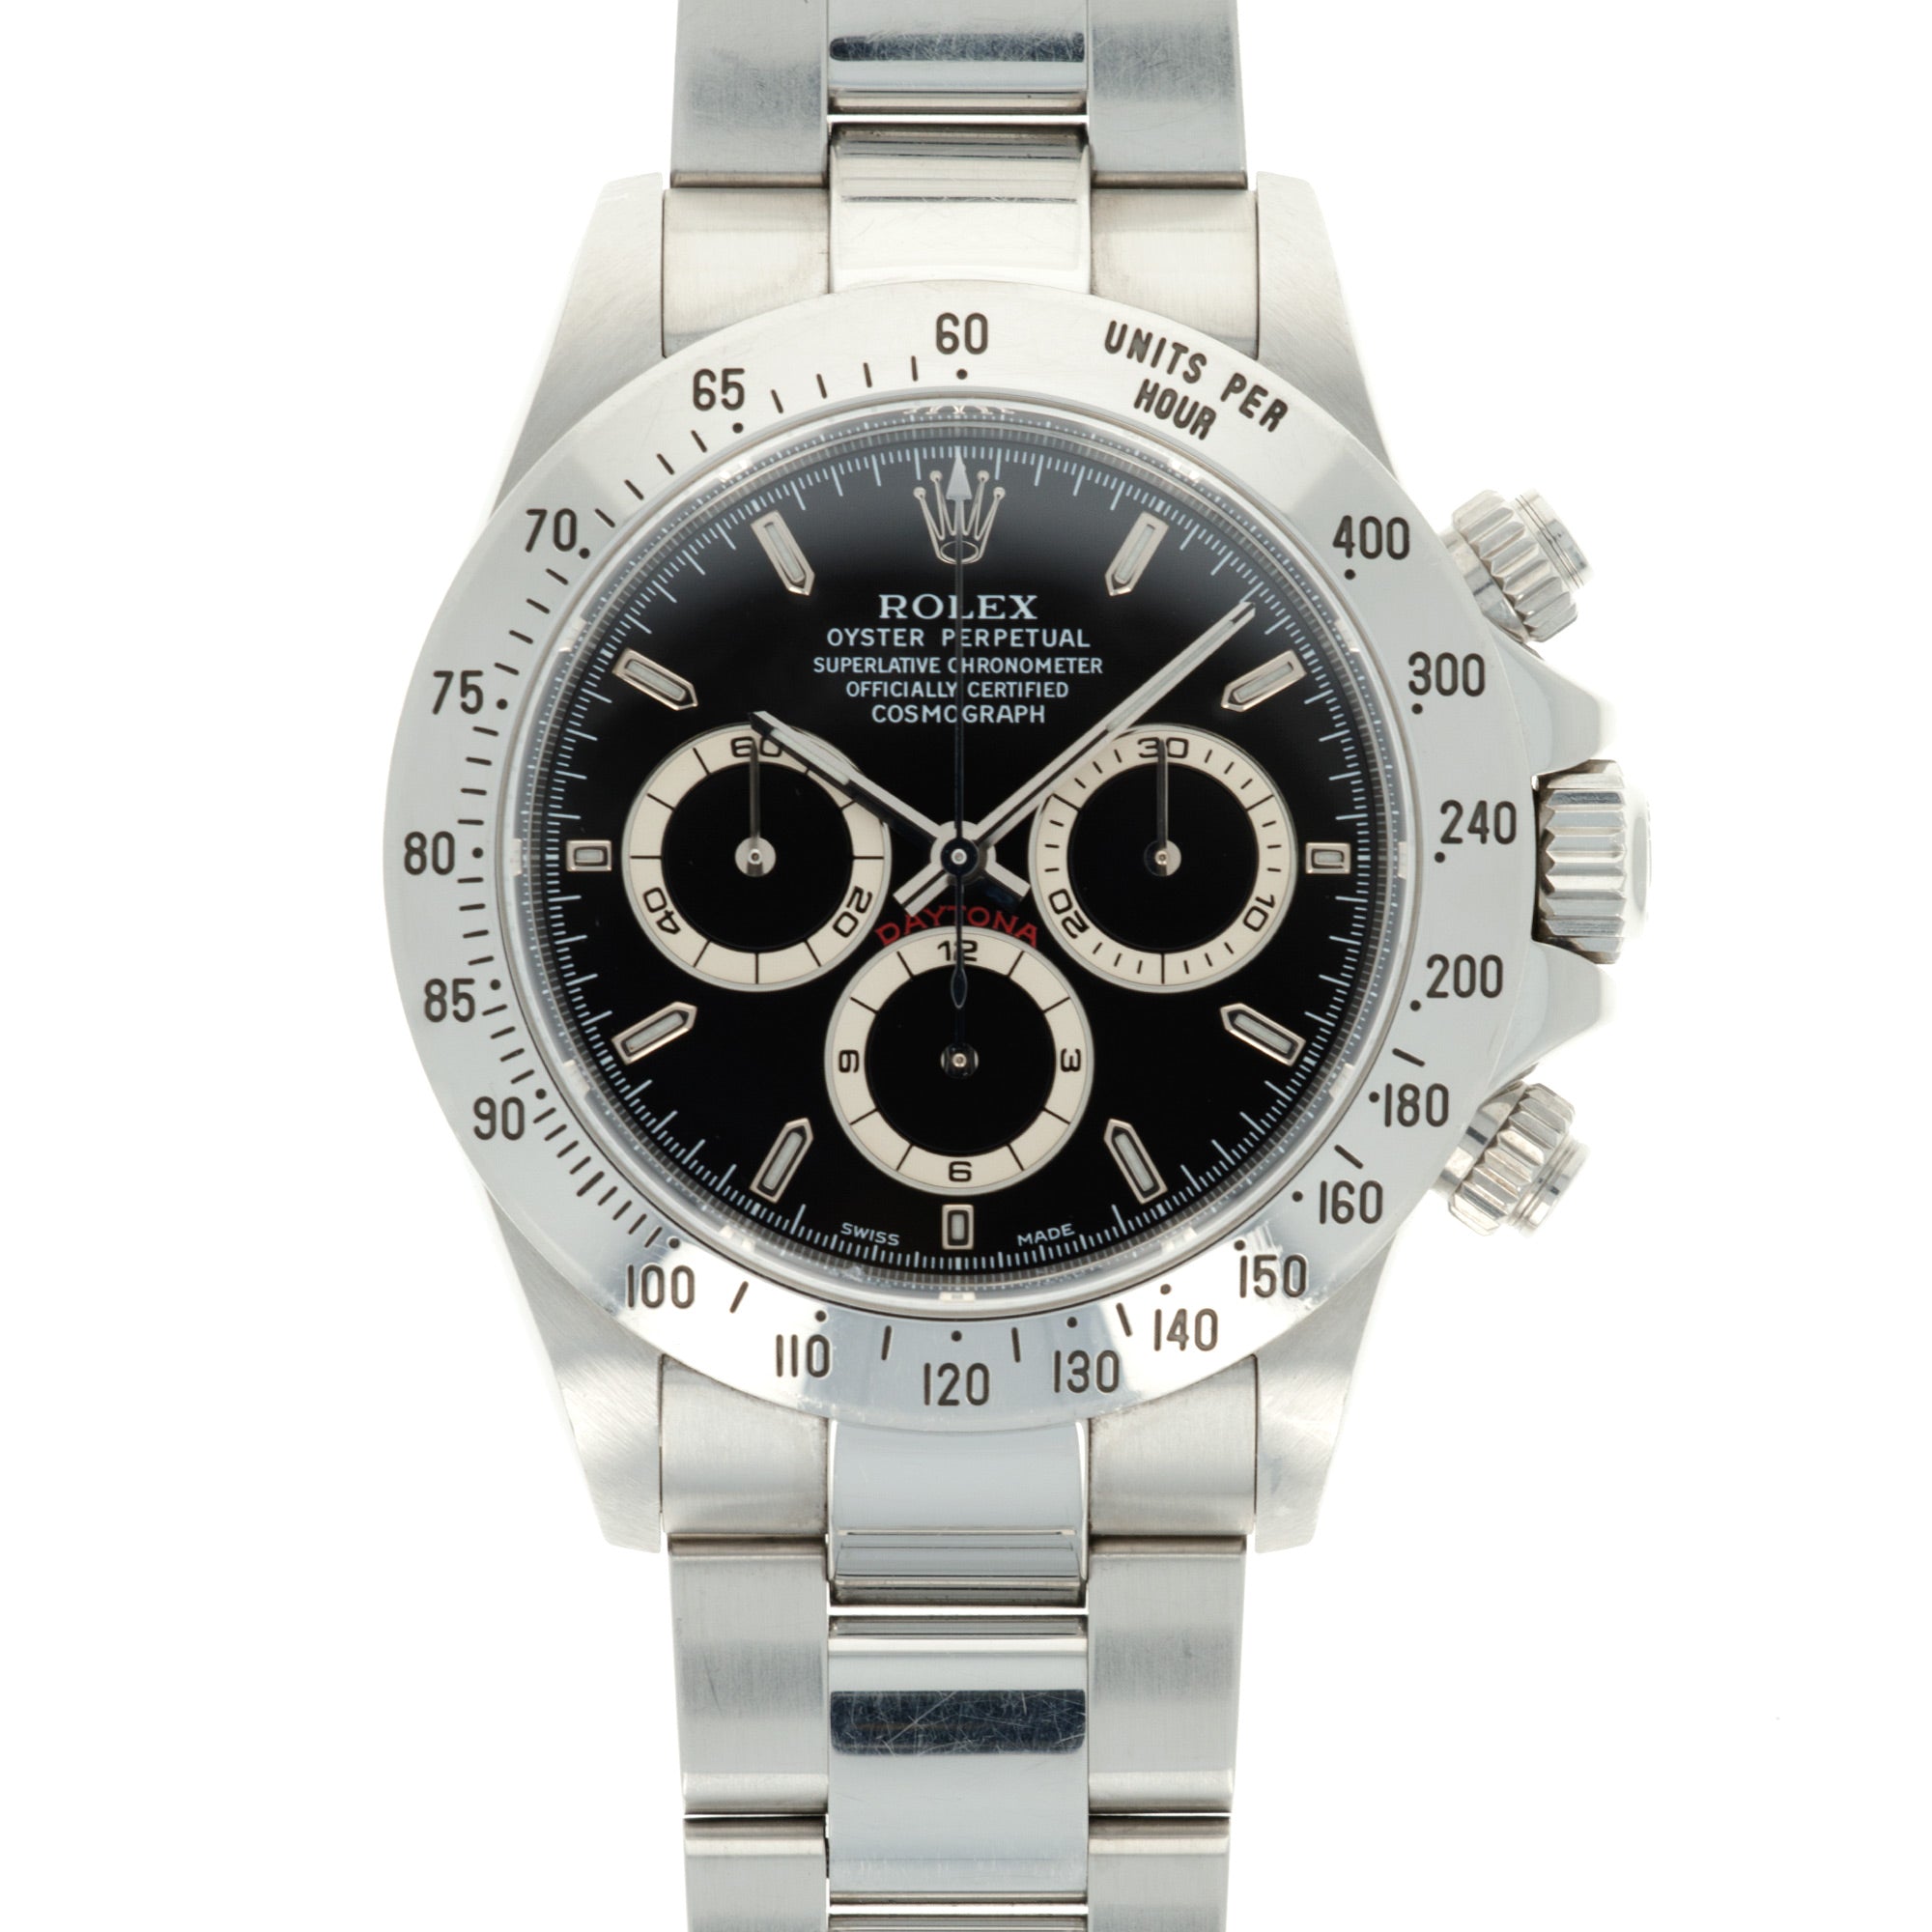 Rolex - Rolex Zenith Daytona Ref. 16520 with Original Papers - The Keystone Watches